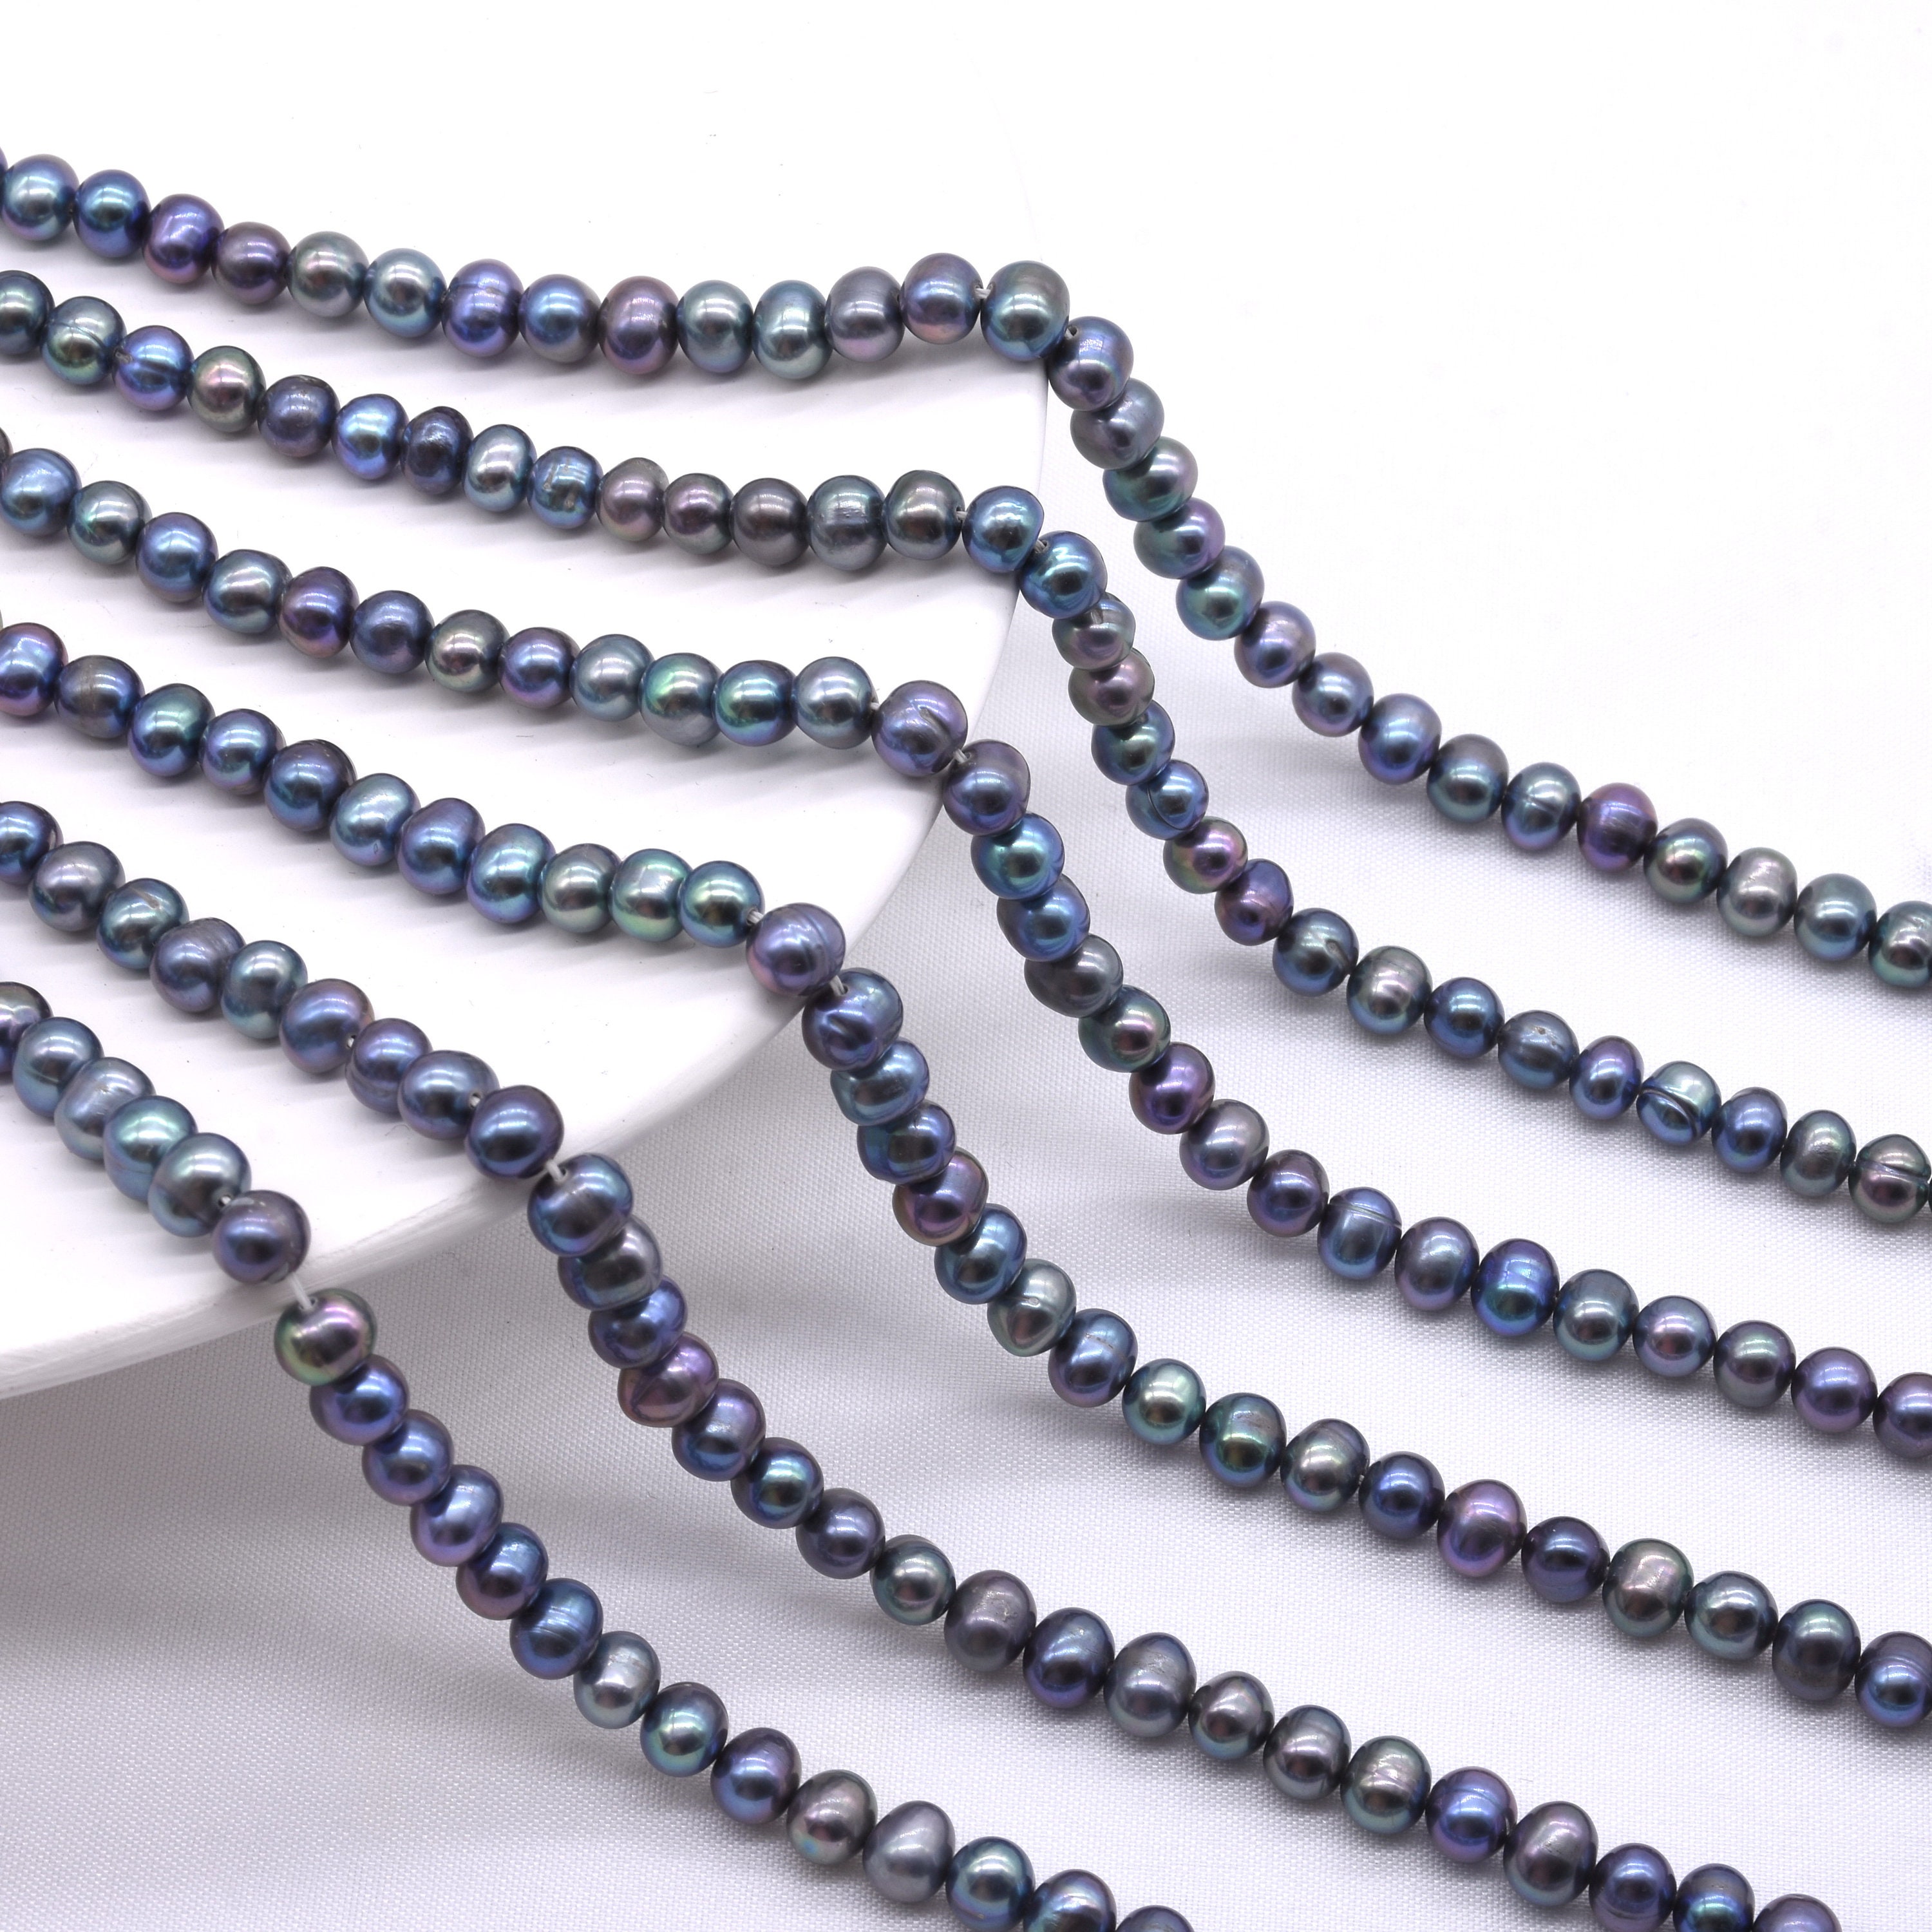 5.5"-6"-10mmX8mm black Pearls-Genuine fresh water Pearl loose beads 14pcs 